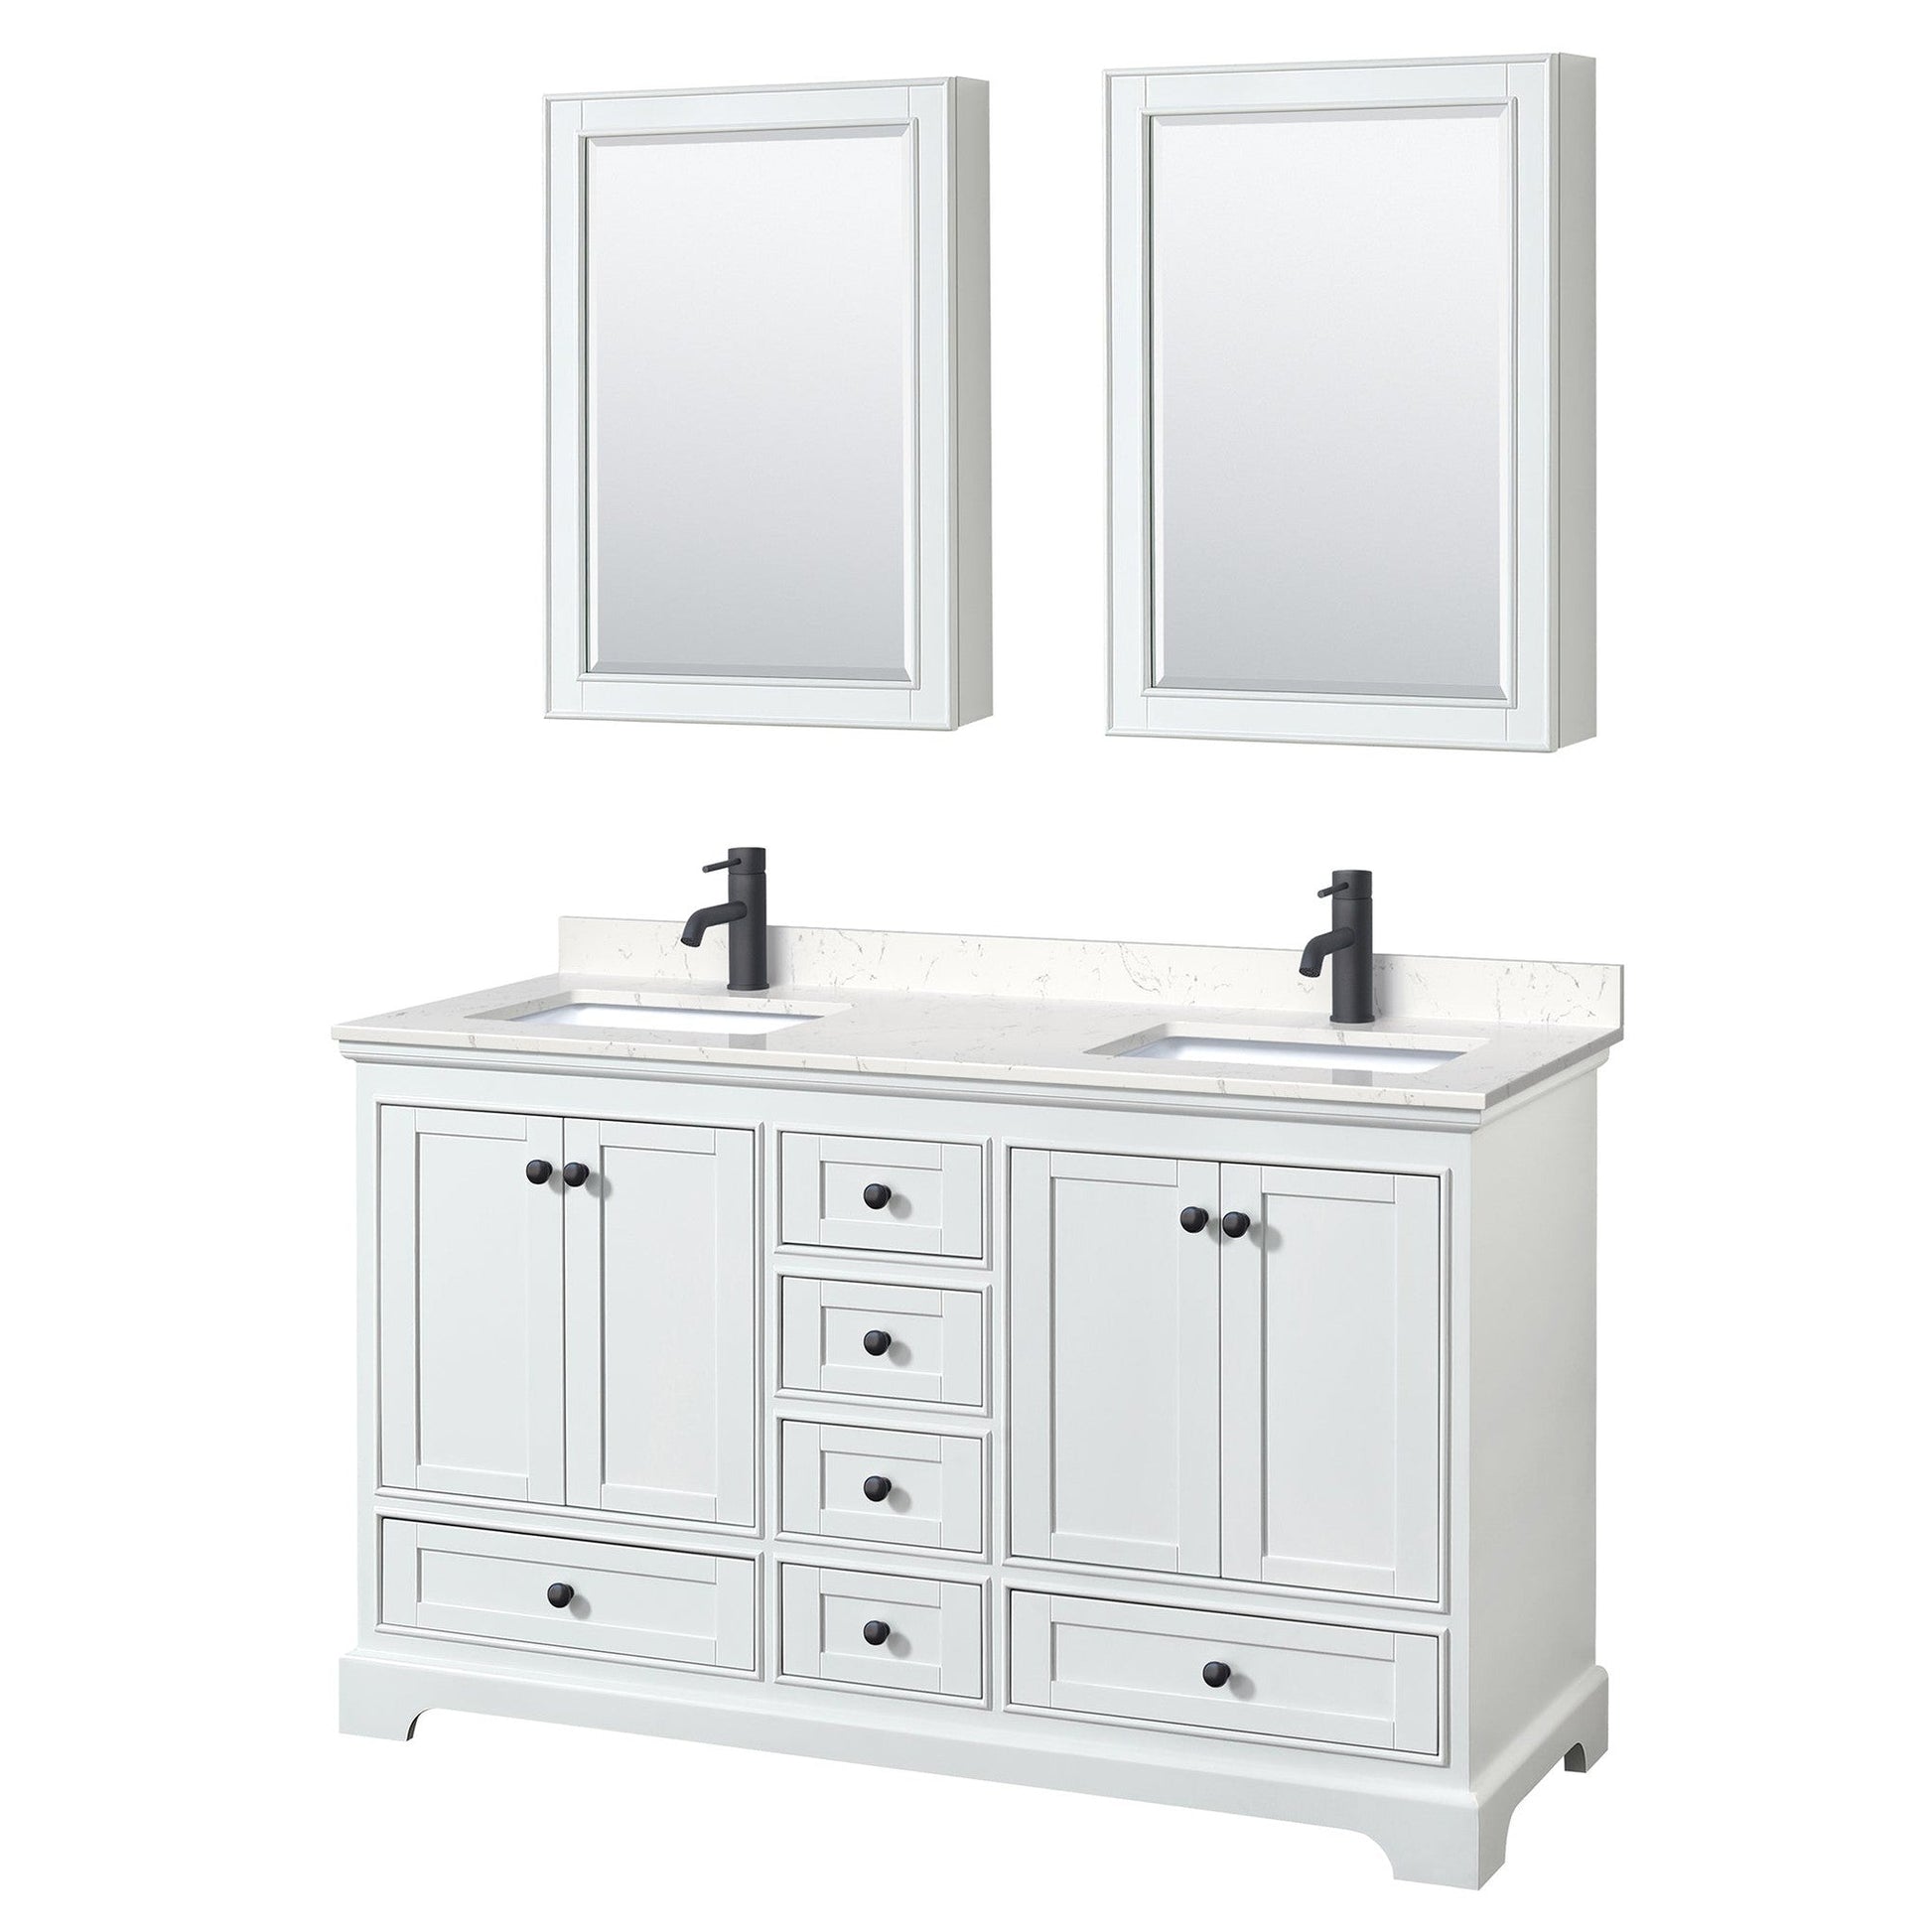 Deborah 60" Double Bathroom Vanity in White, Carrara Cultured Marble Countertop, Undermount Square Sinks, Matte Black Trim, Medicine Cabinets